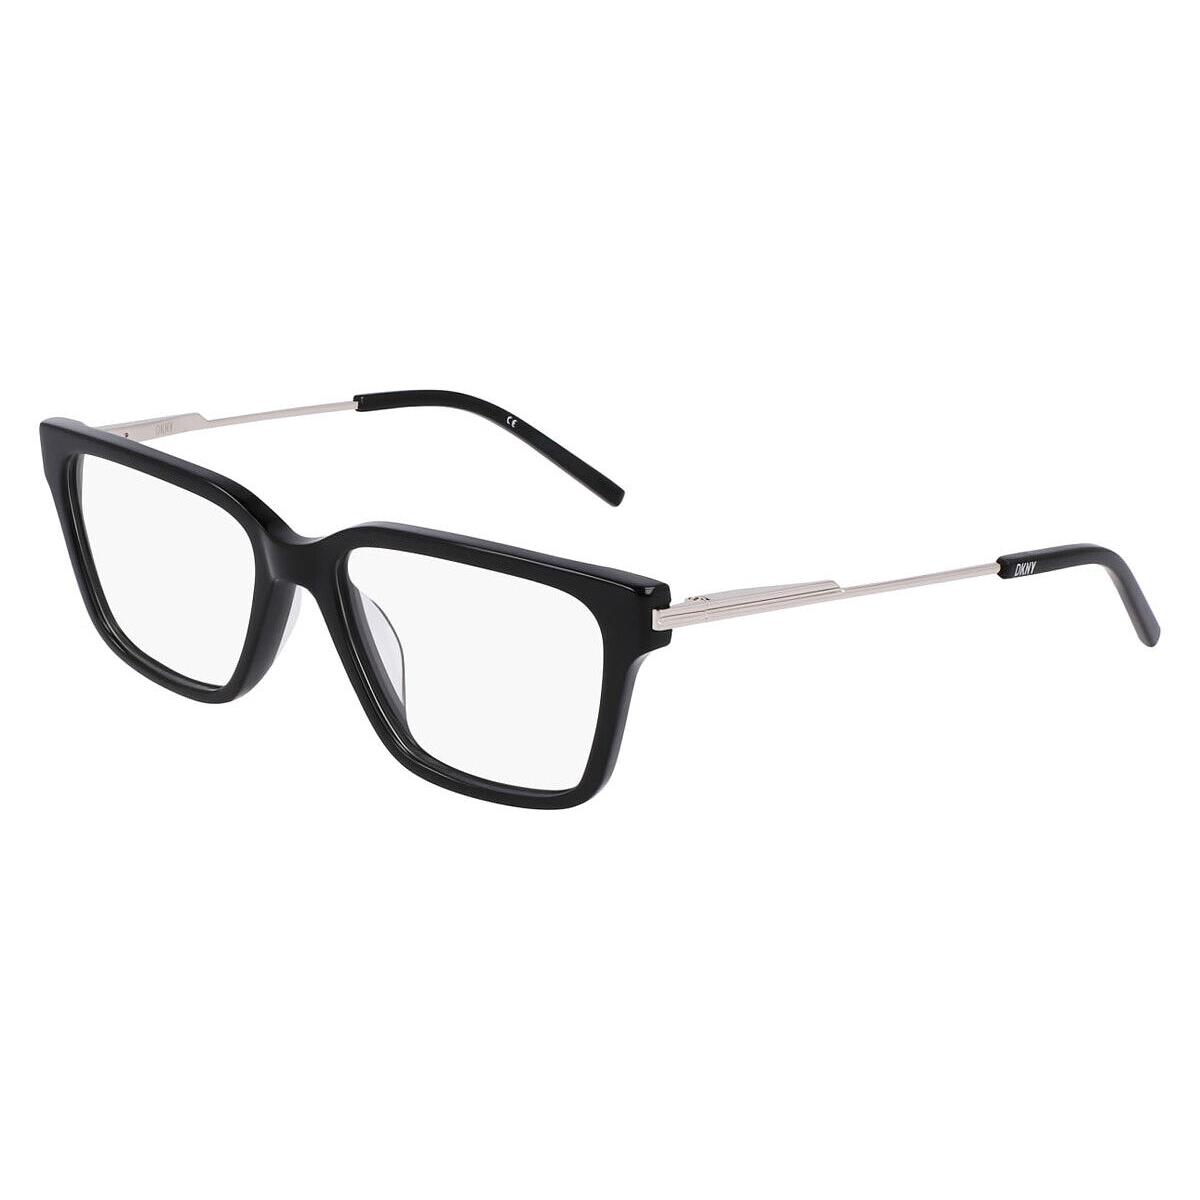 Dkny DK7012 Eyeglasses Women Black 53mm